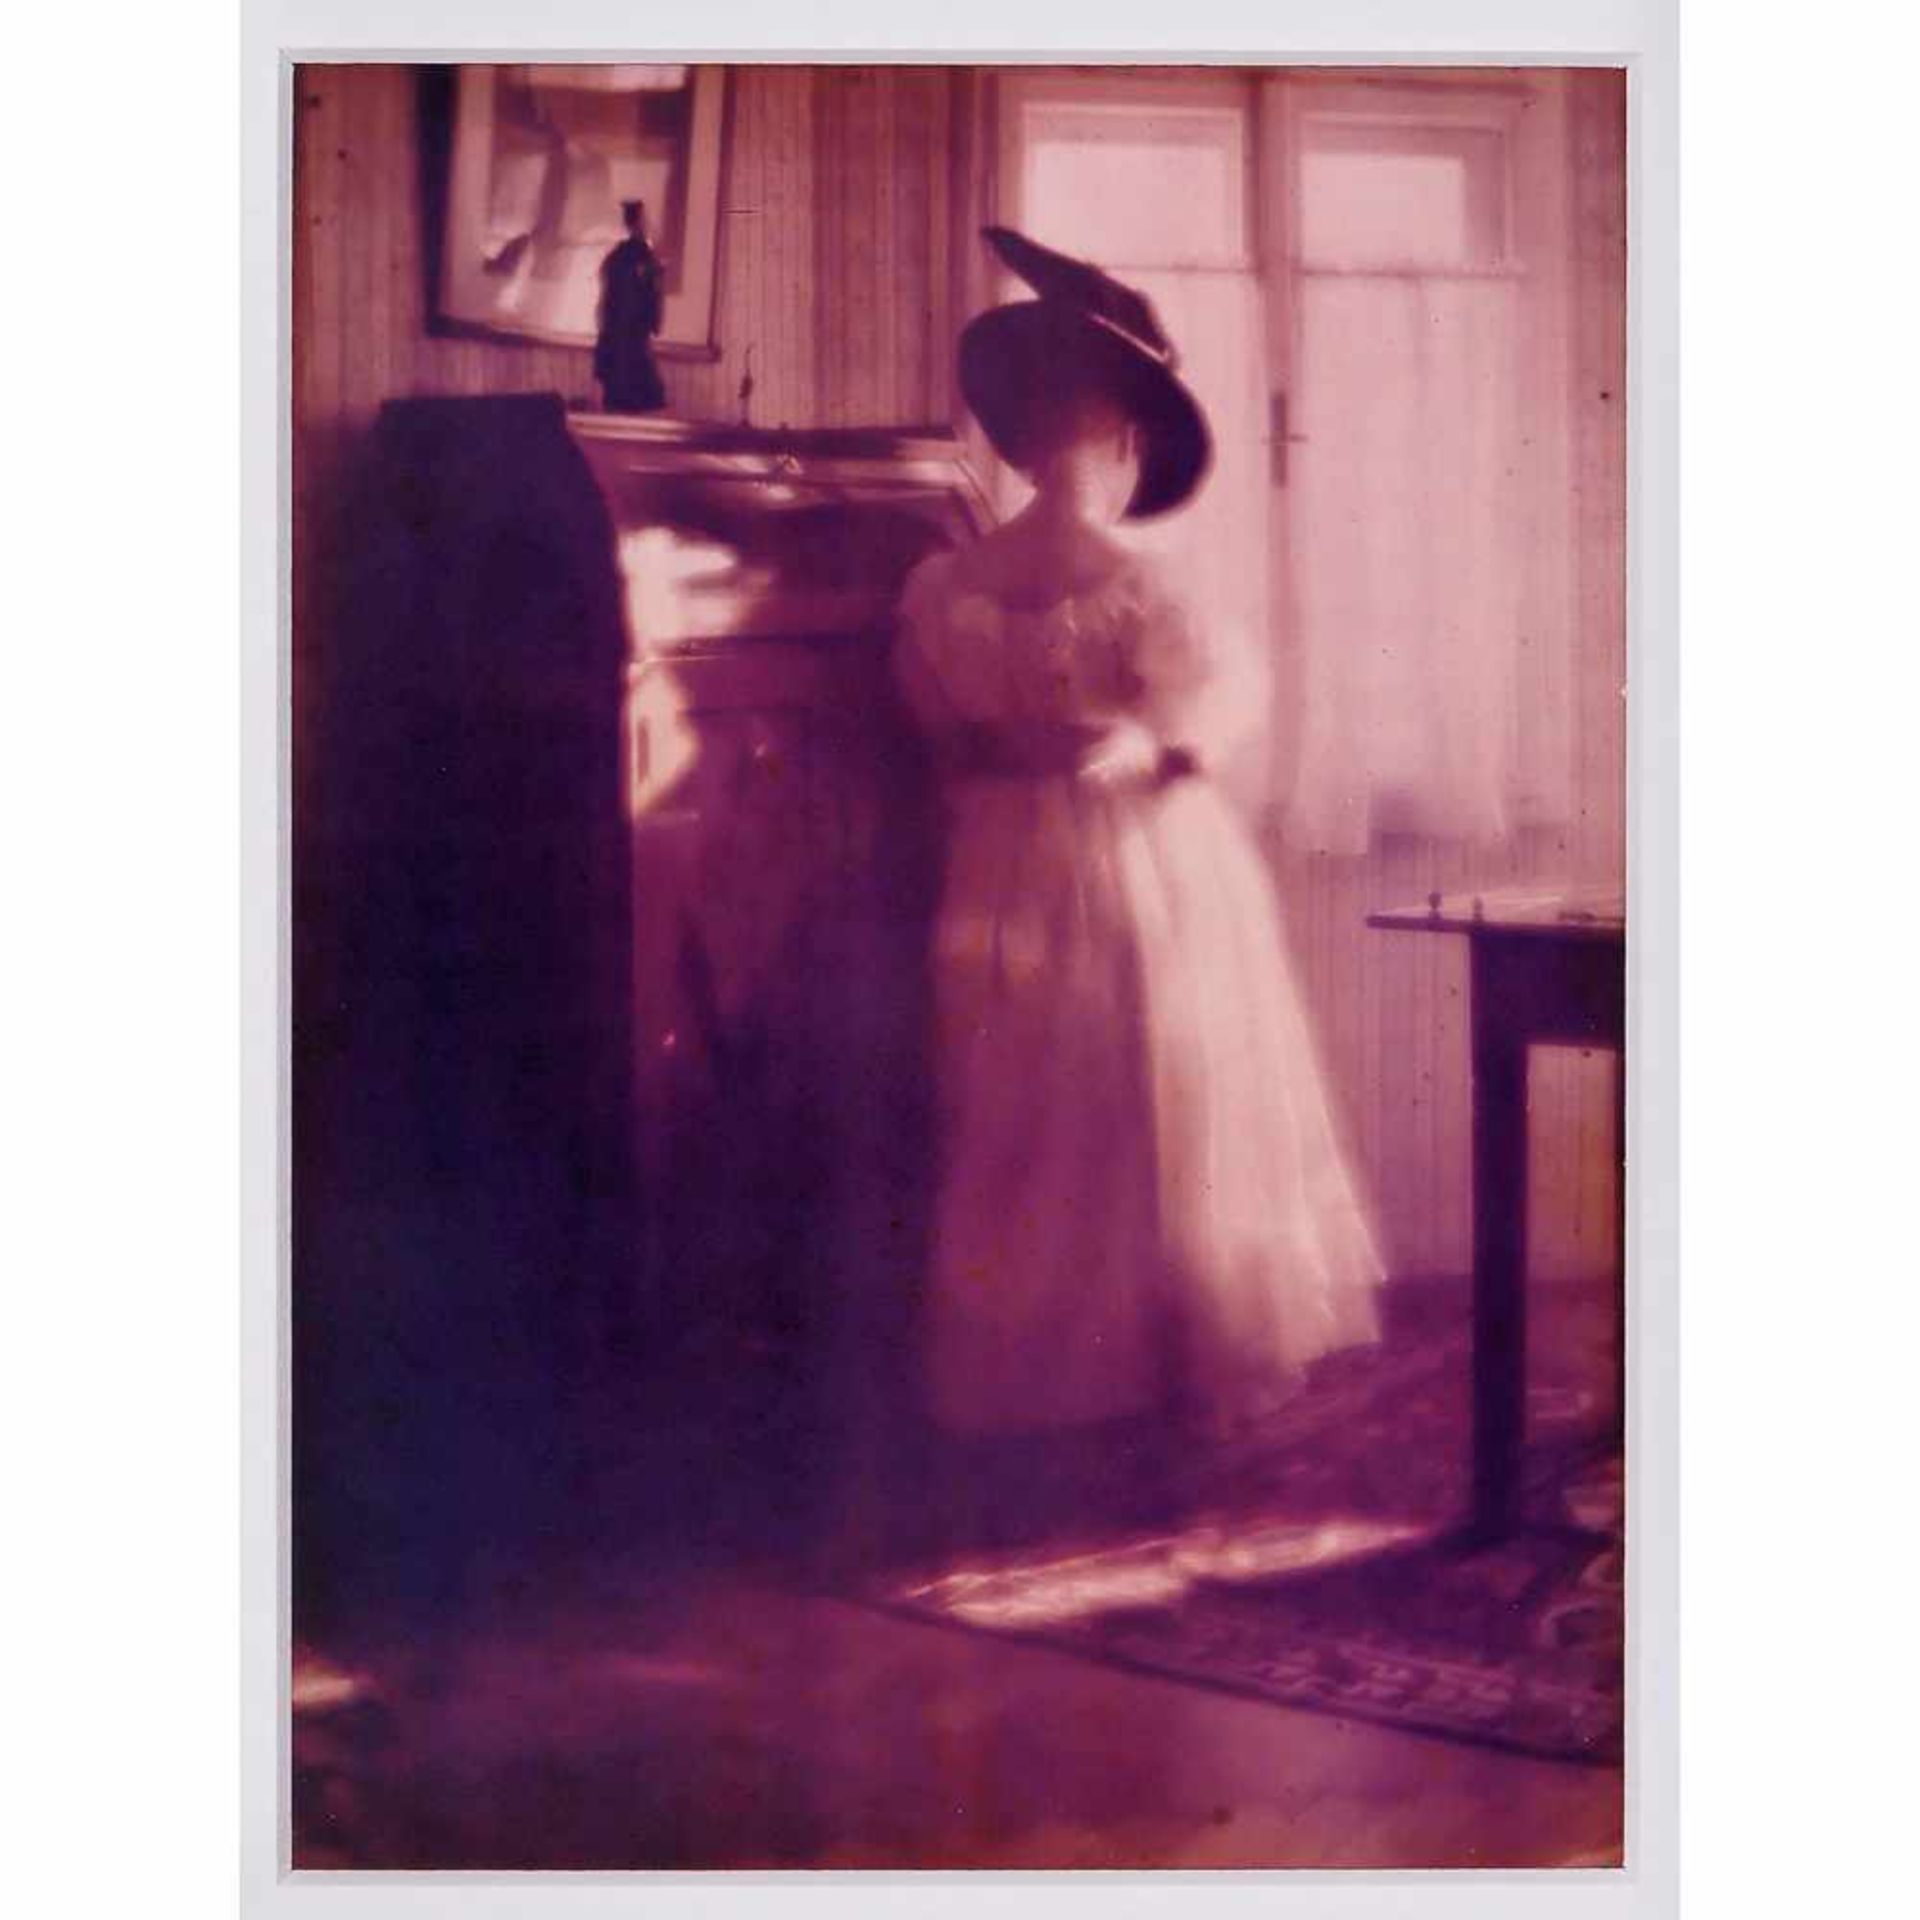 Heinrich Kühn (1866–1944)"Lady in back light" (H. Kühn, 1912). Reprint from original autochrome